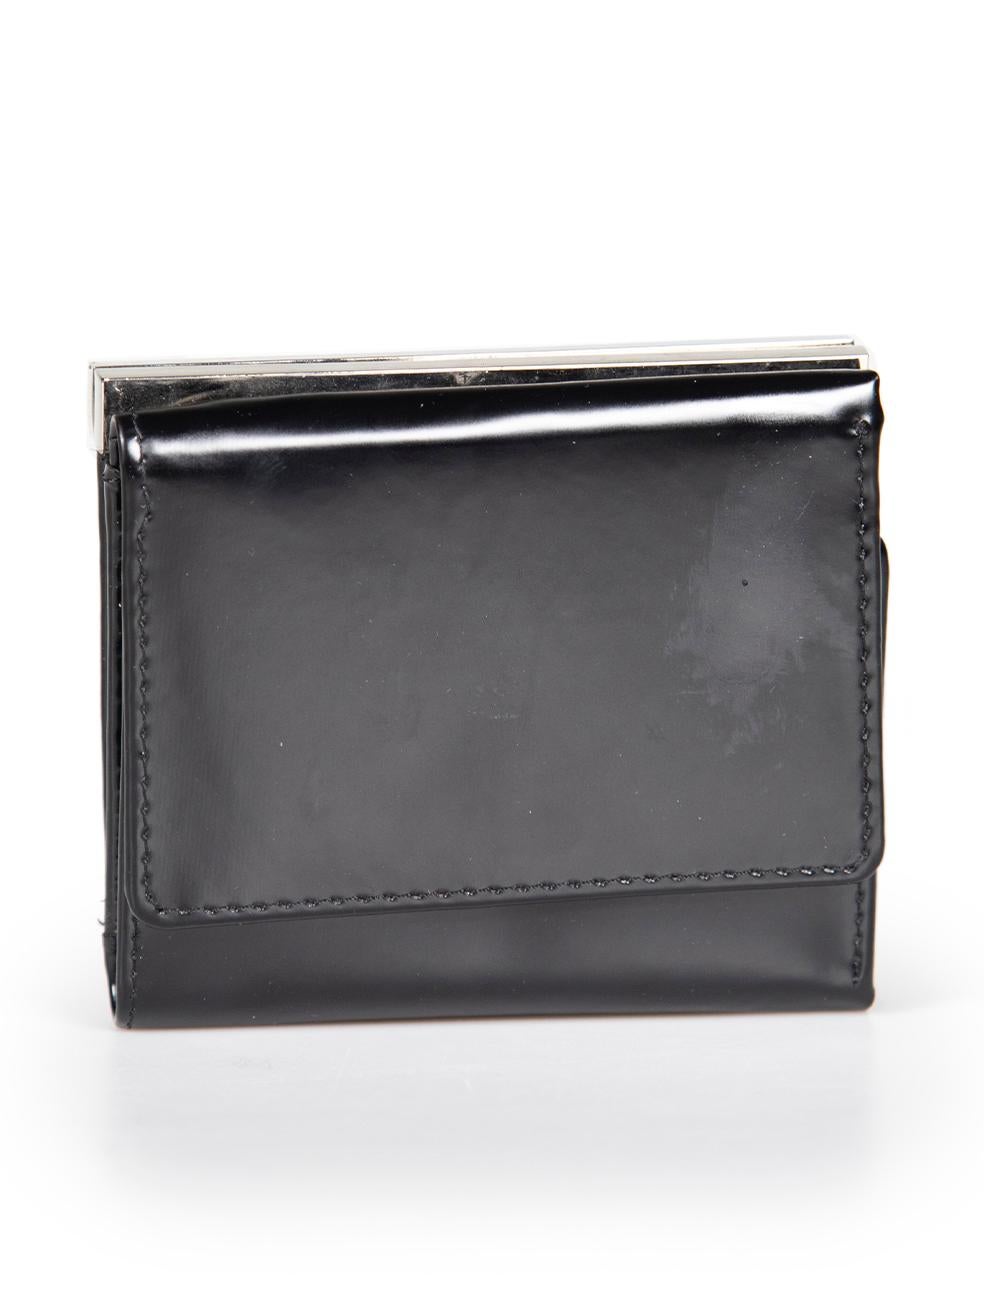 Salvatore Ferragamo Black Leather Gamaguchi Gancini Wallet In Excellent Condition For Sale In London, GB